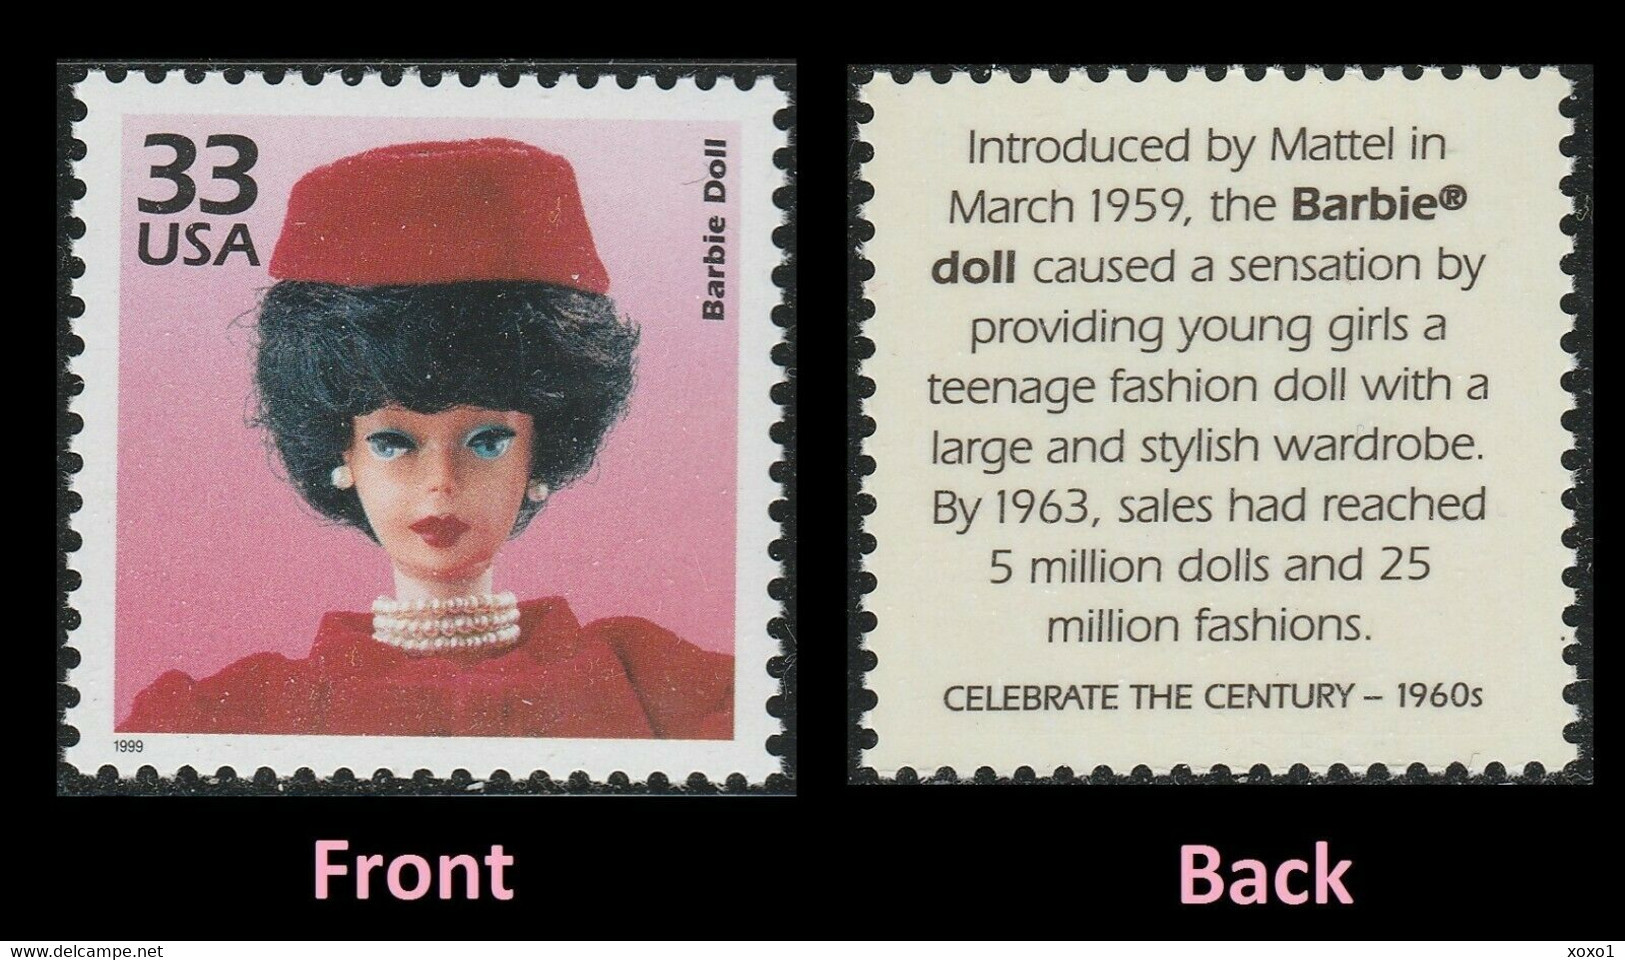 USA 1999 MiNr. 3179 Celebrate The Century 1960s  Childhood & Youth  Barbie Doll 1v MNH ** 0,80 € - Poppen